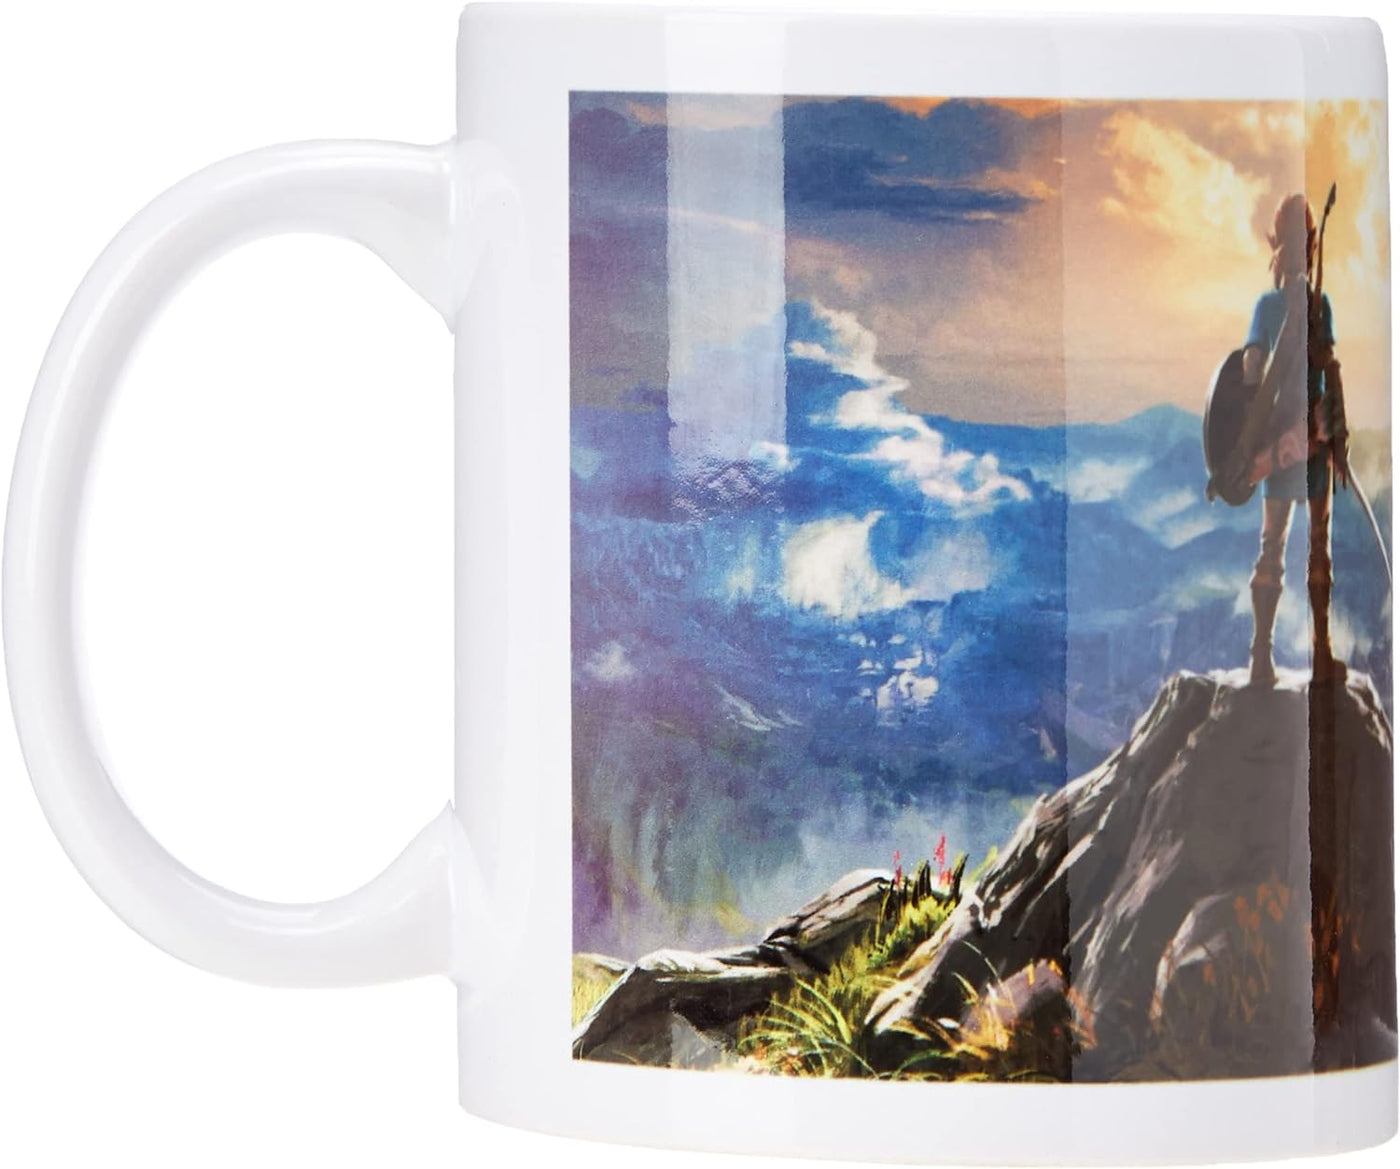 The Legend Of Zelda: Breath Of The Wild Sunset Ceramic Mug